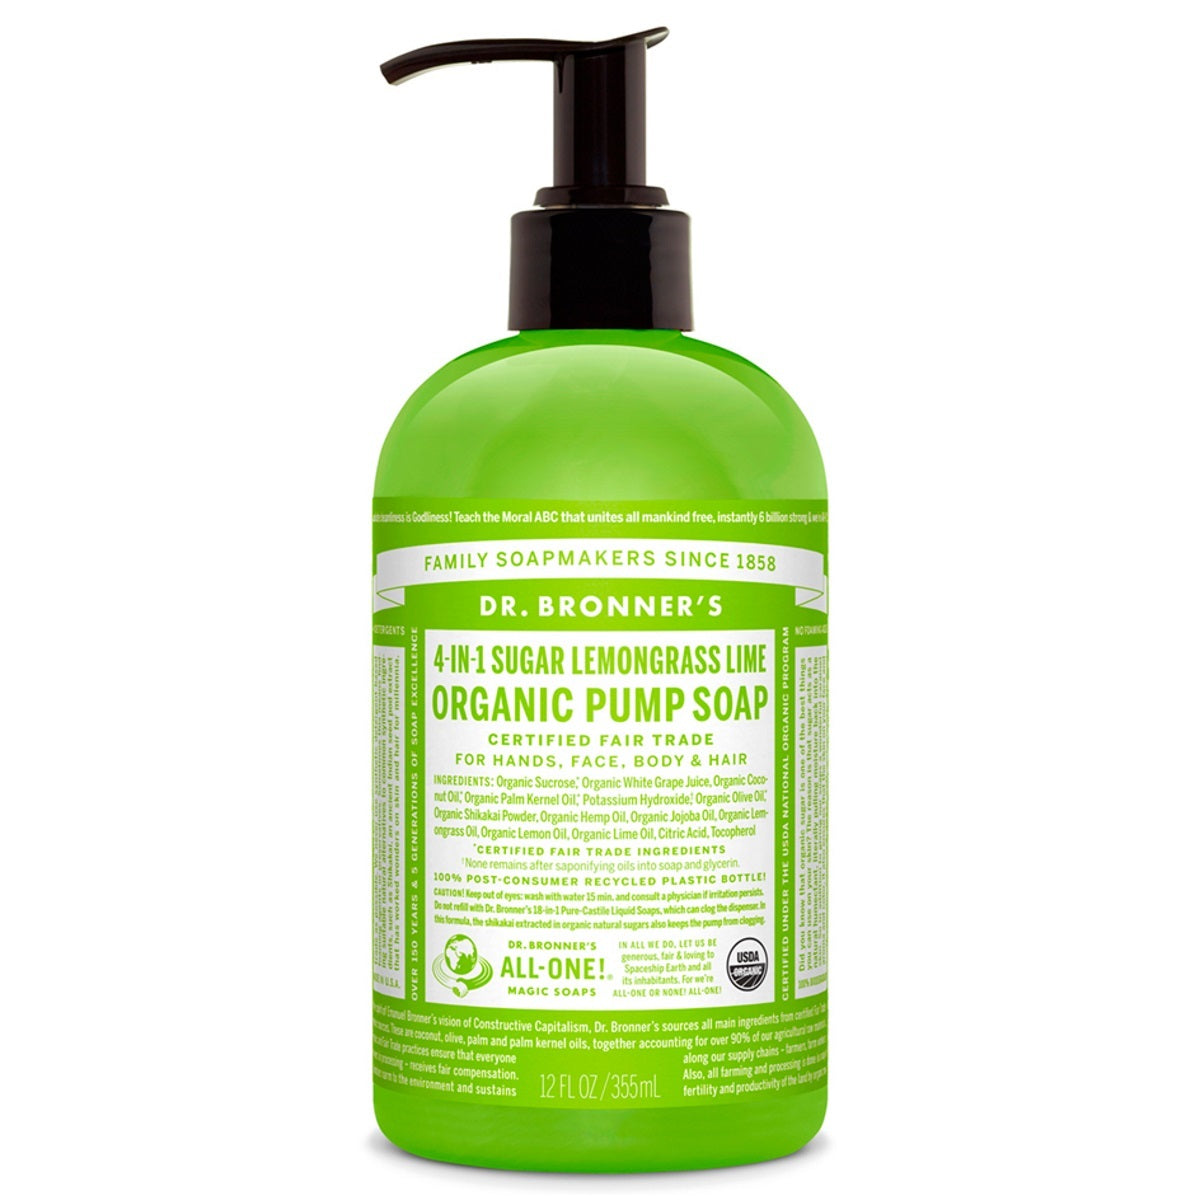 Primary image of Sugar Lemongrass Lime Organic Pump Soap